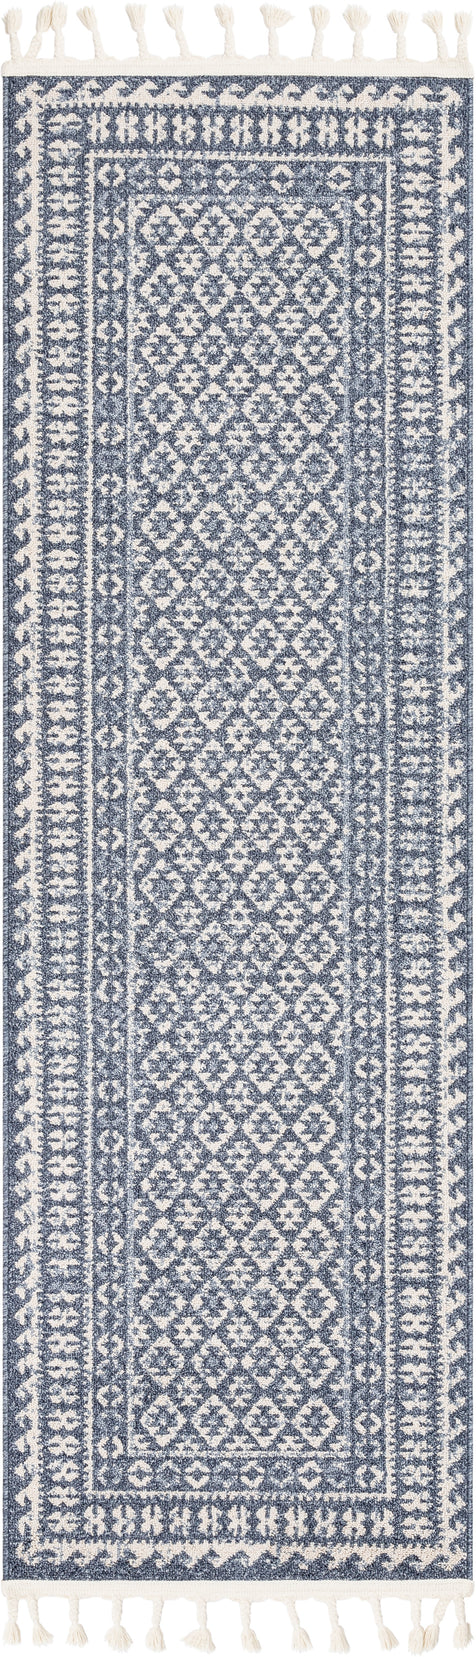 Callista Tribal Trellis Pattern Blue Kilim-Style Rug